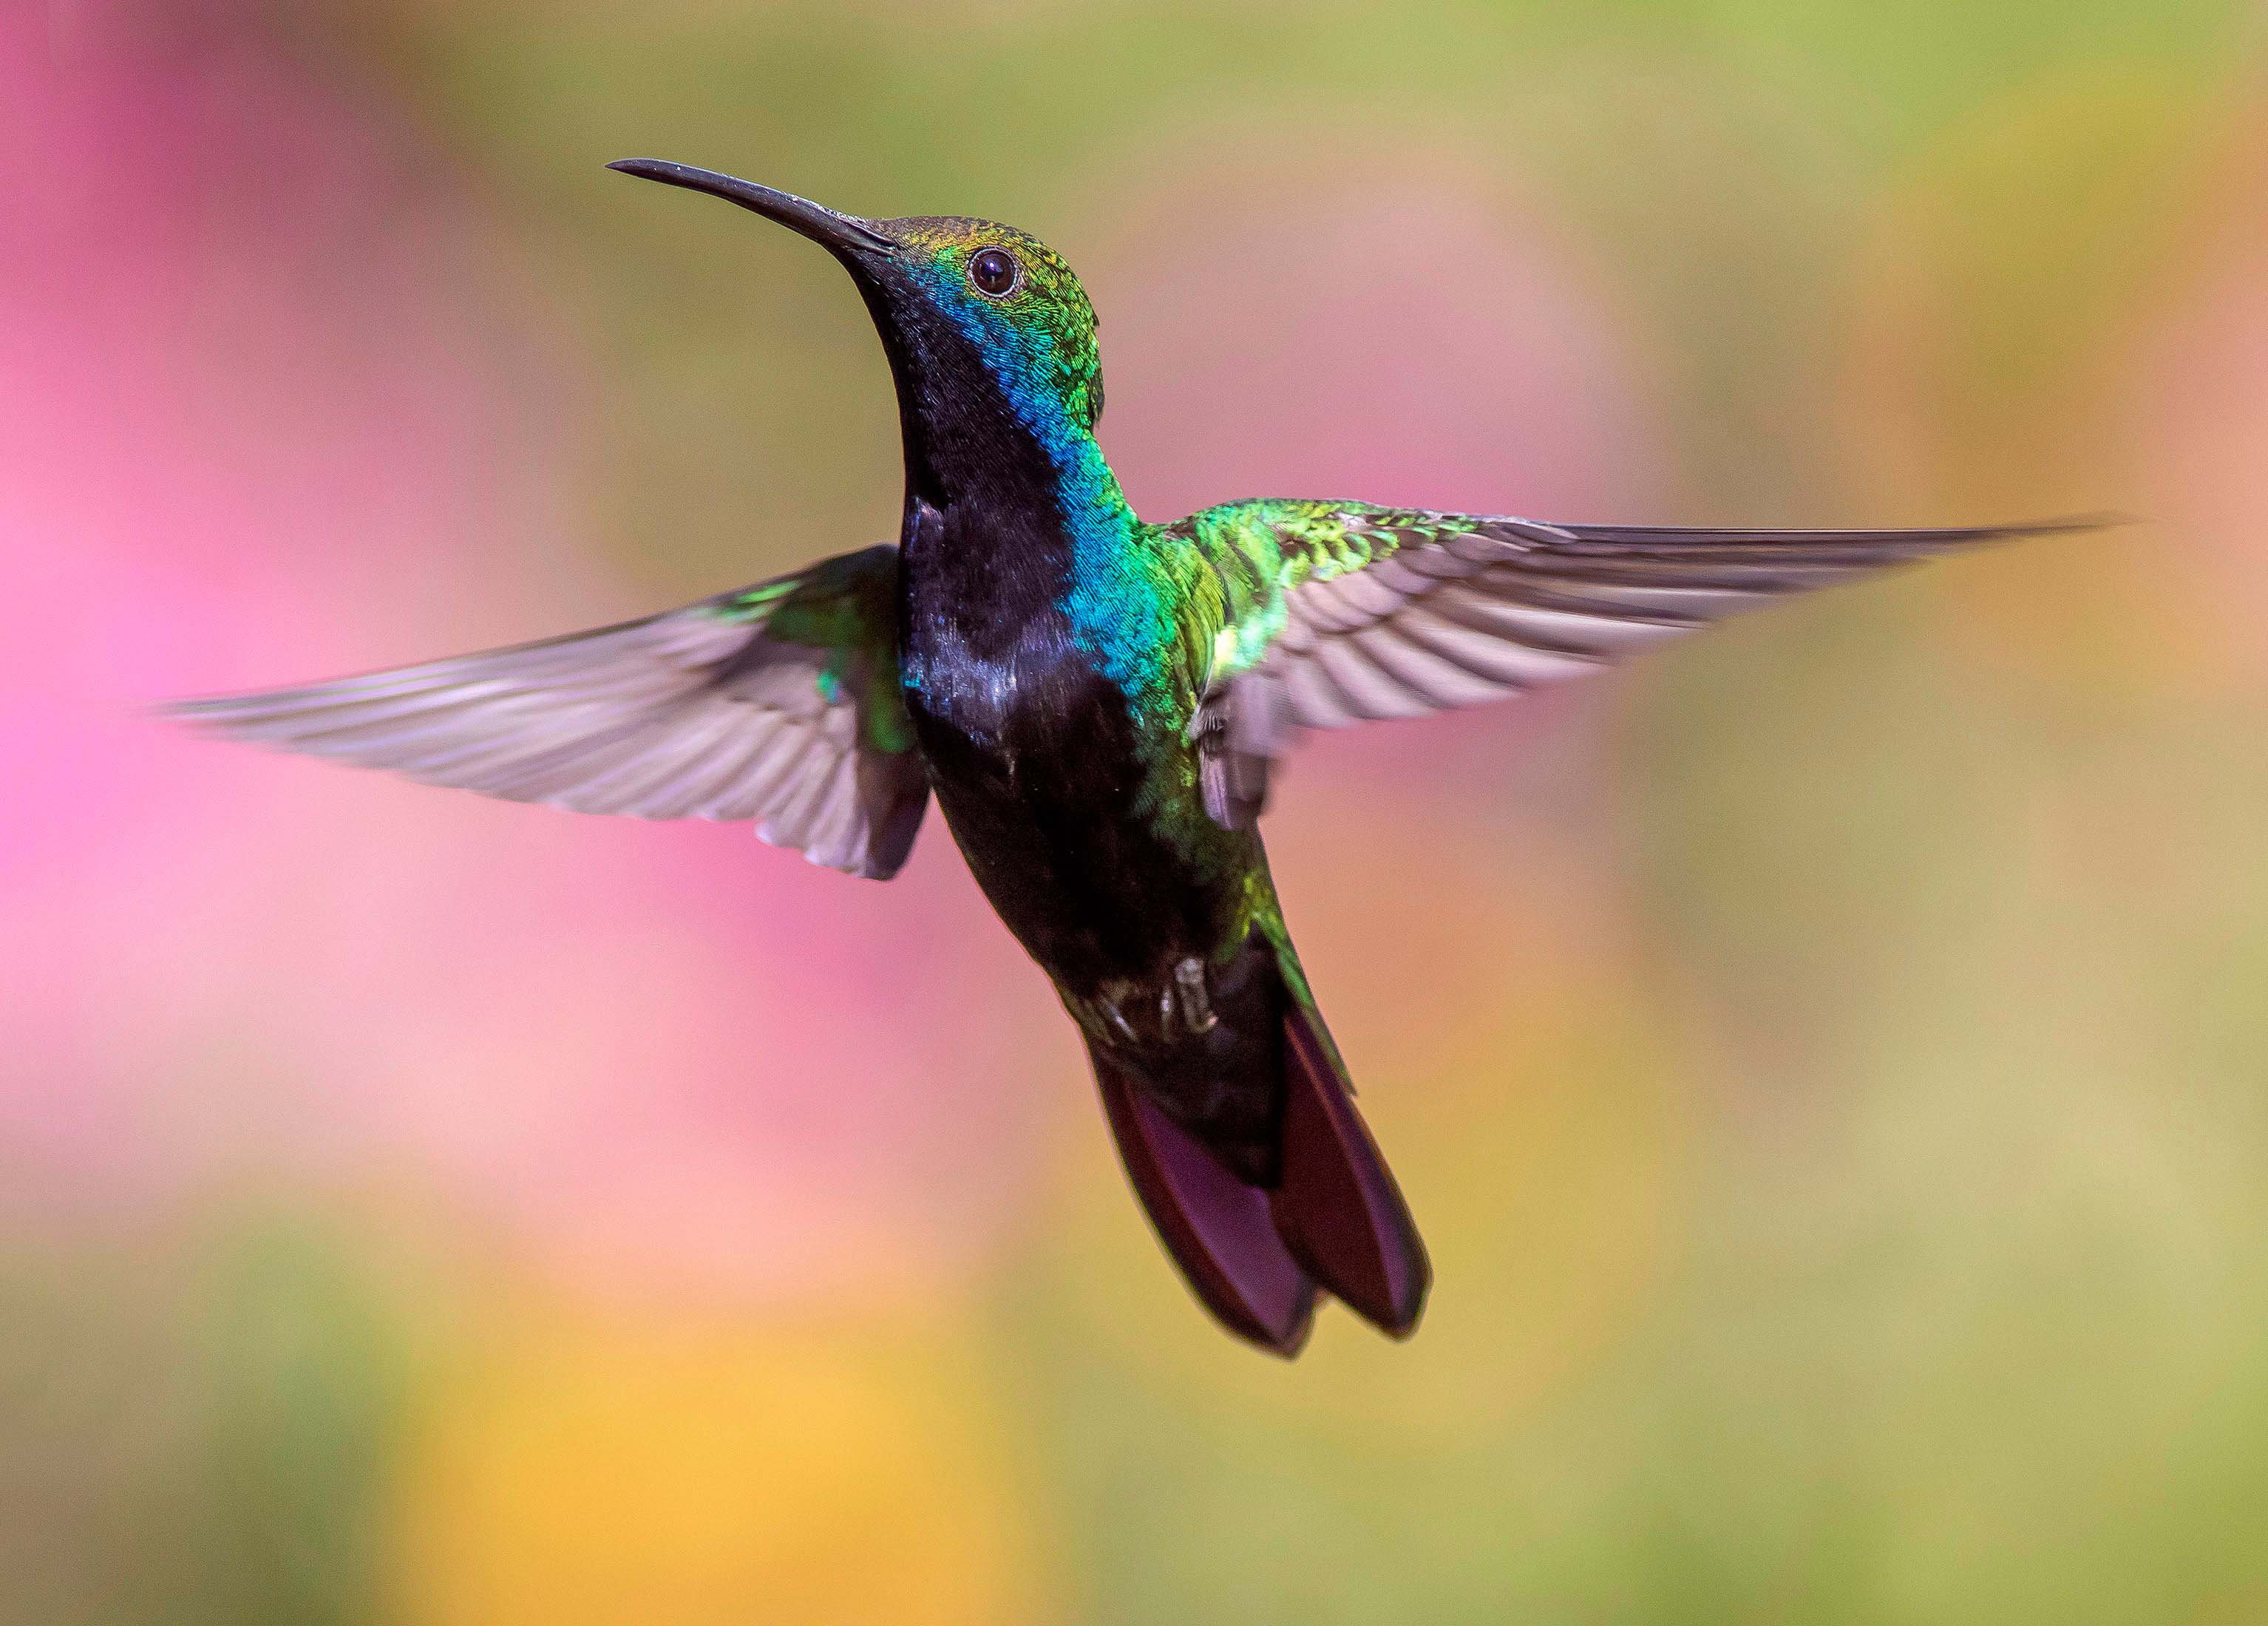 Speedy hummingbird